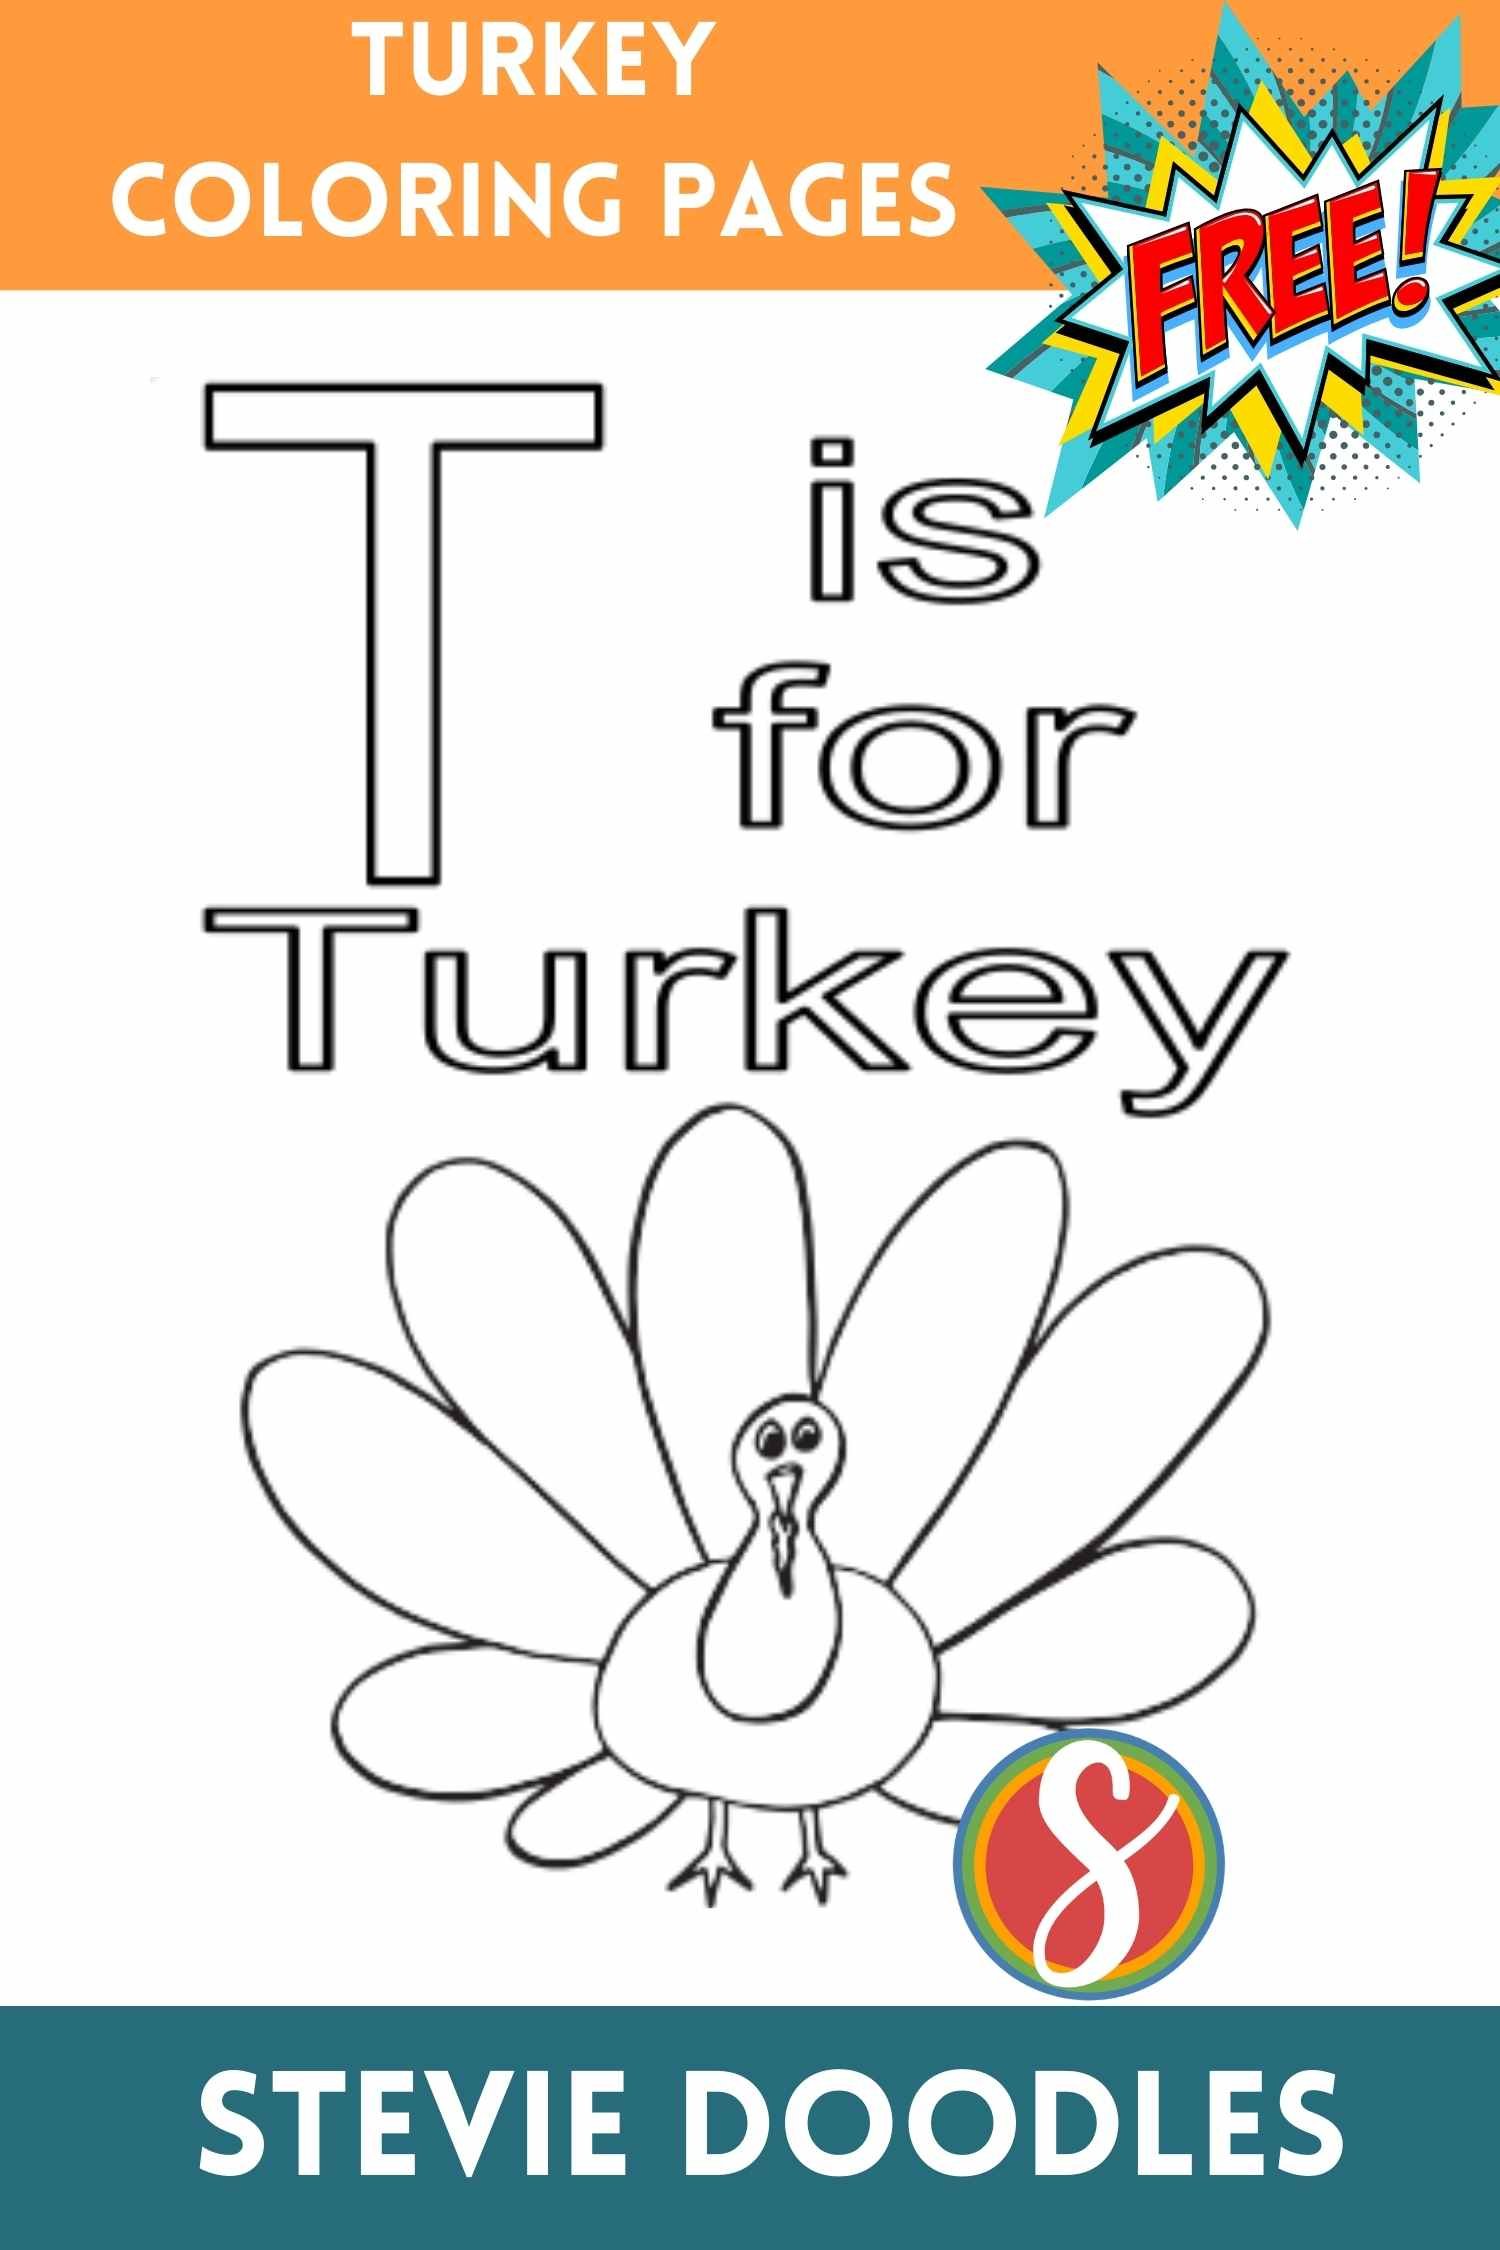 Free turkey coloring pages â stevie doodles